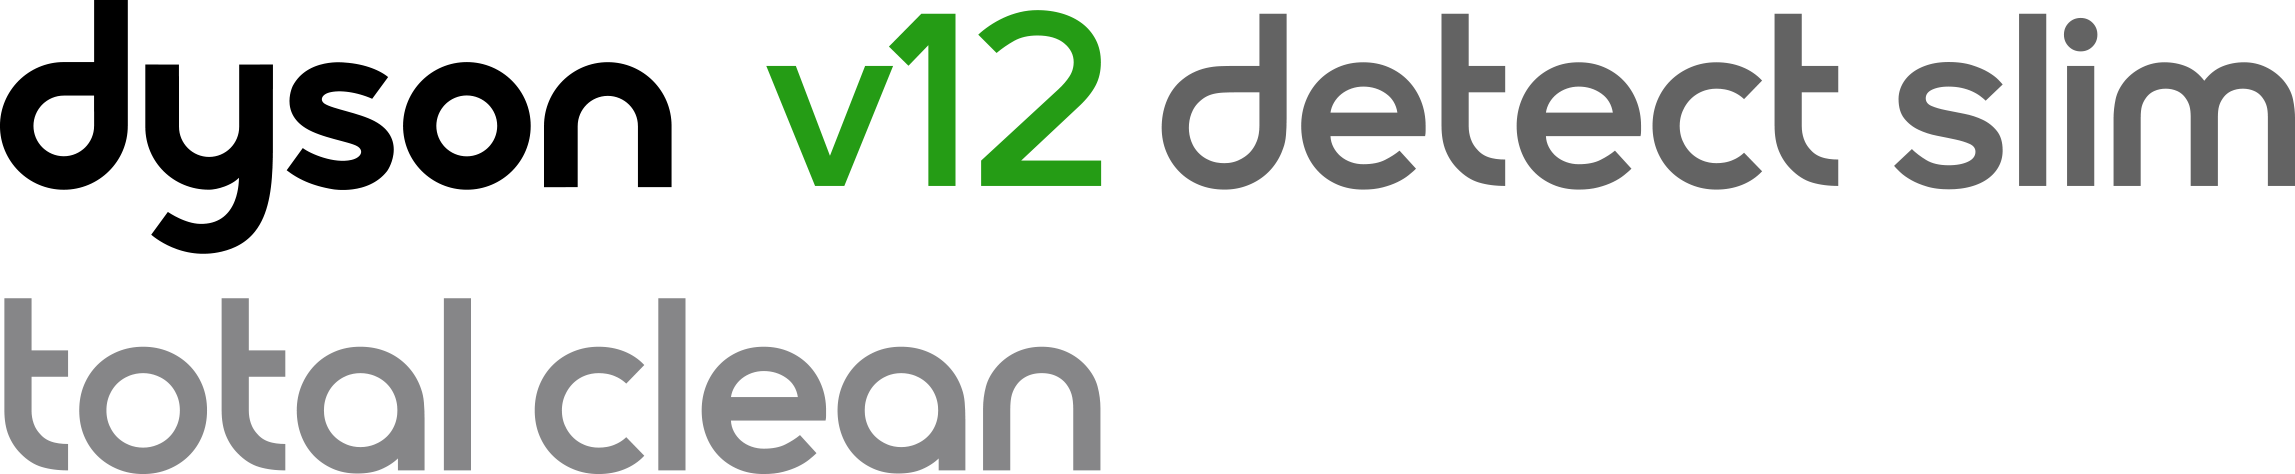 Dyson V12 Detect Slim™ Total Clean logo